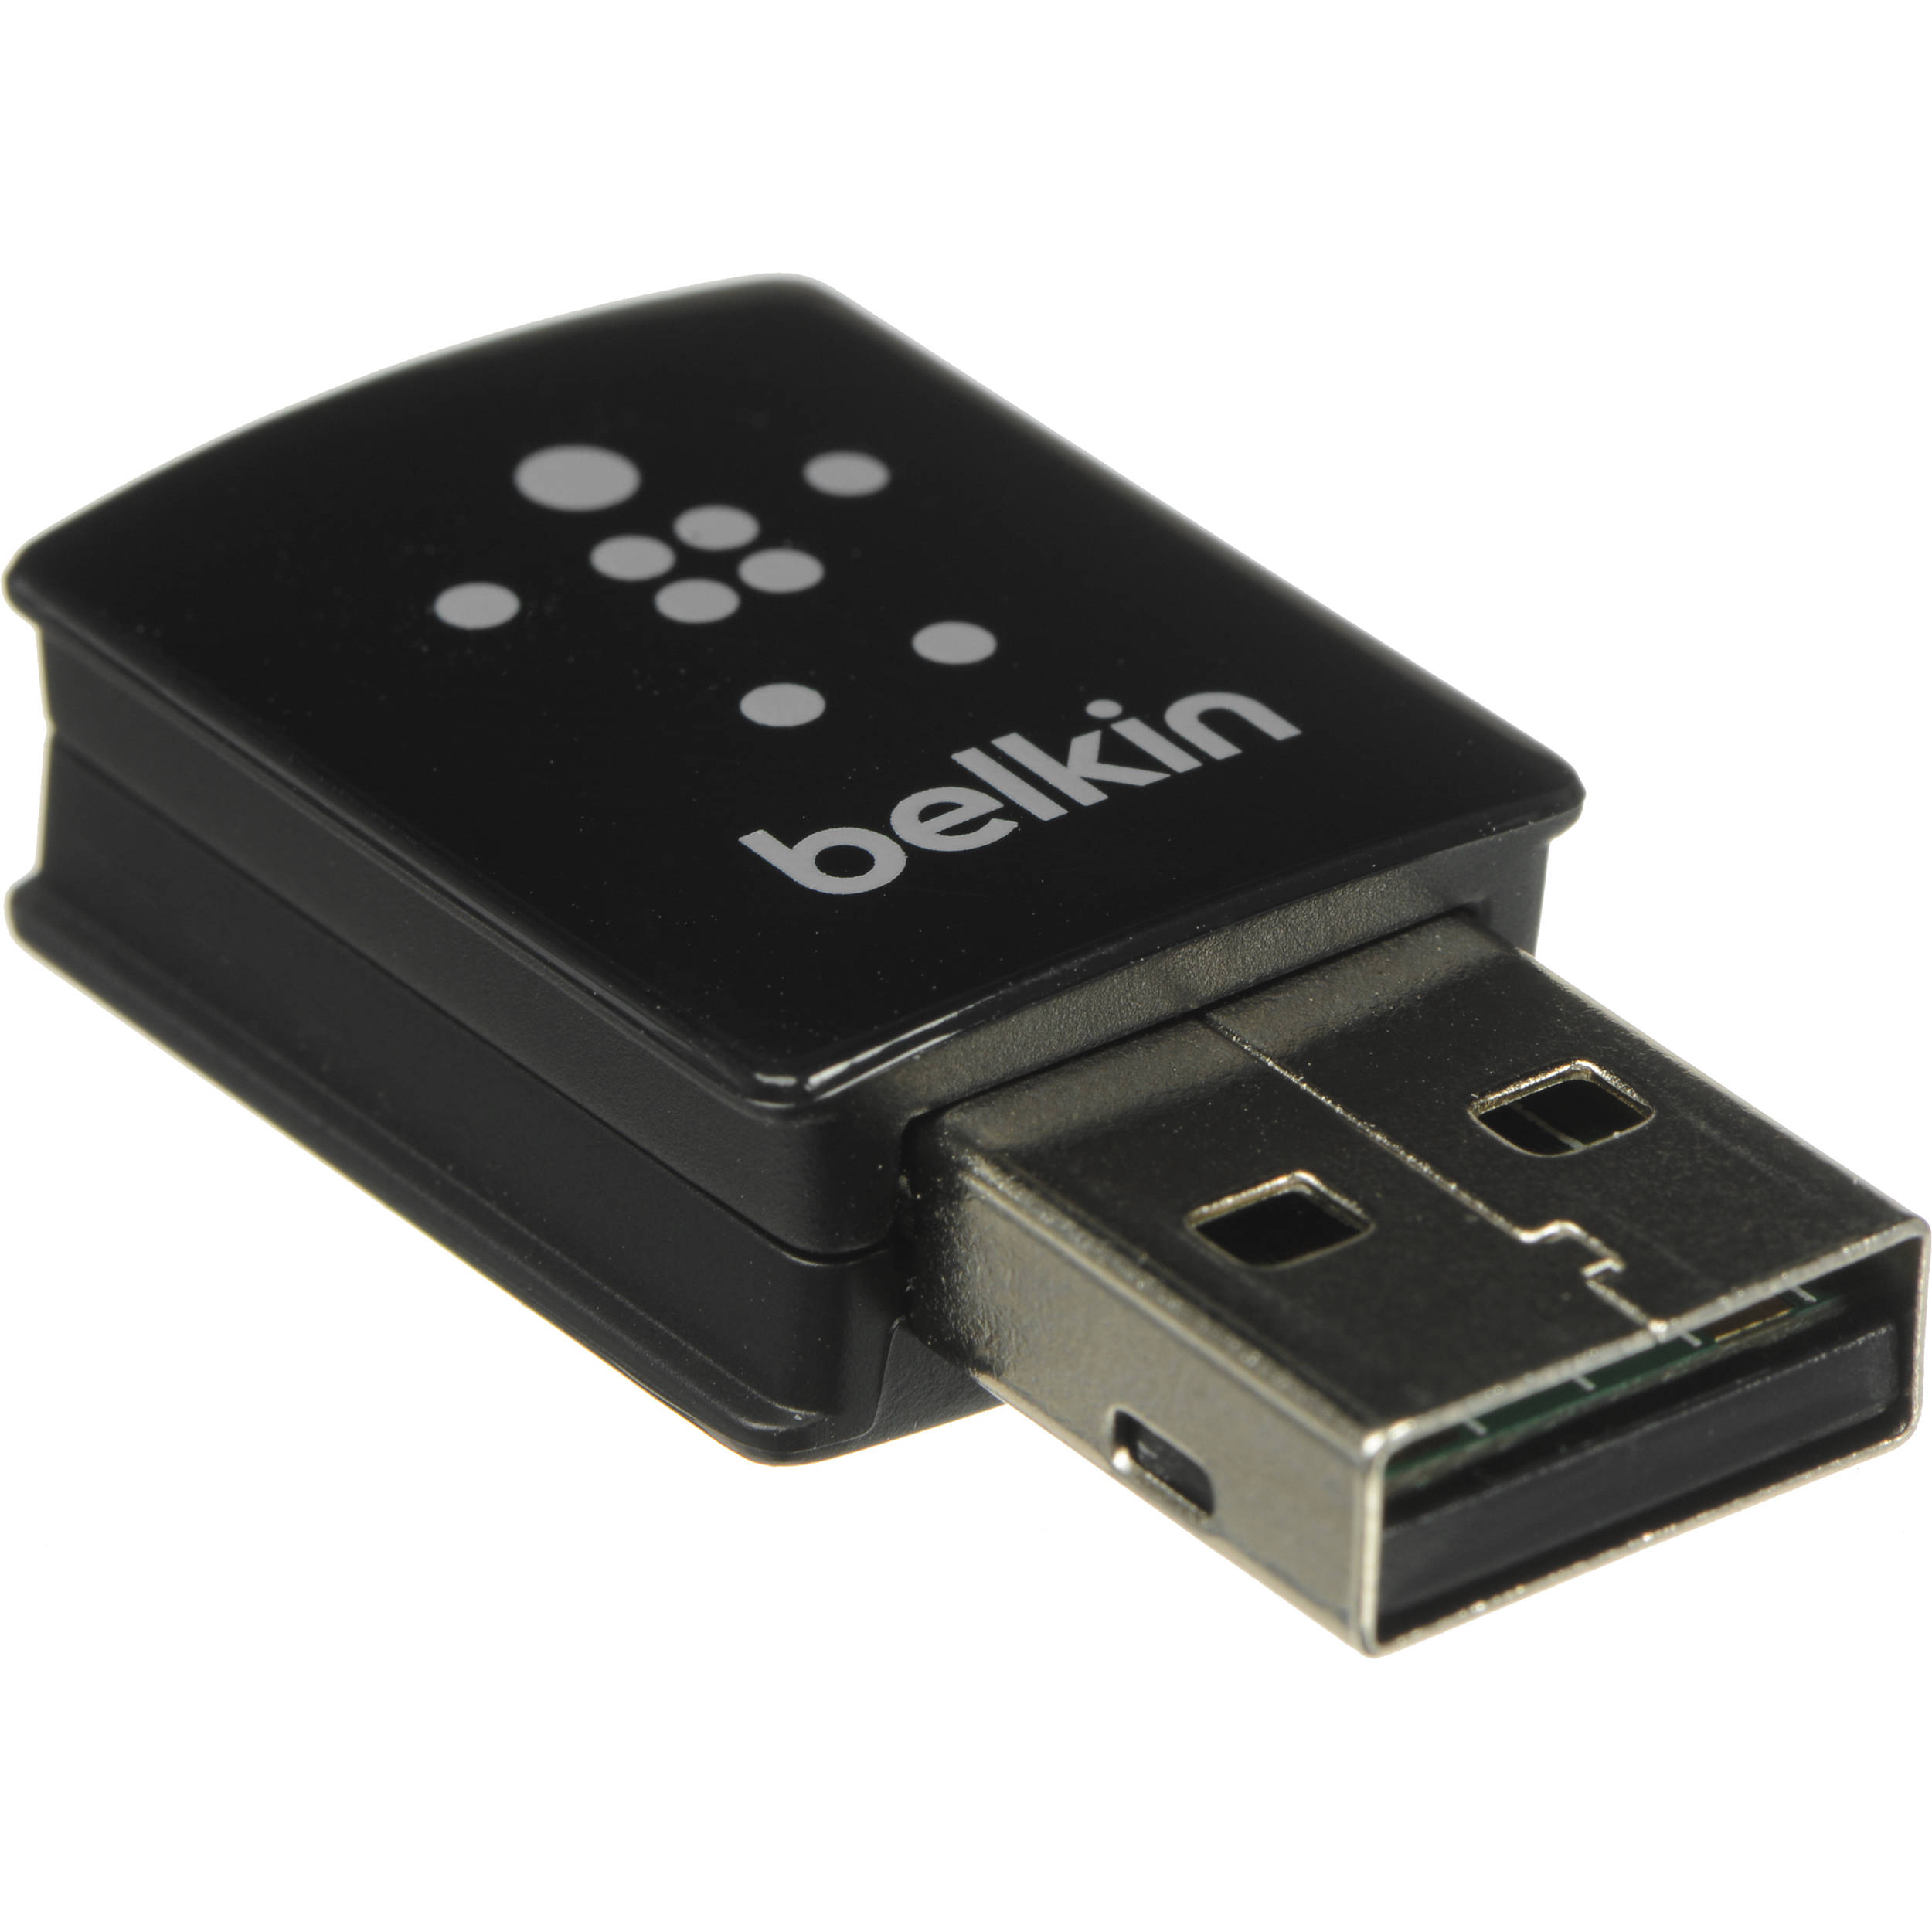 BELKIN N300 MICRO WIRELESS-N USB ADAPTER DRIVERS FOR MAC DOWNLOAD